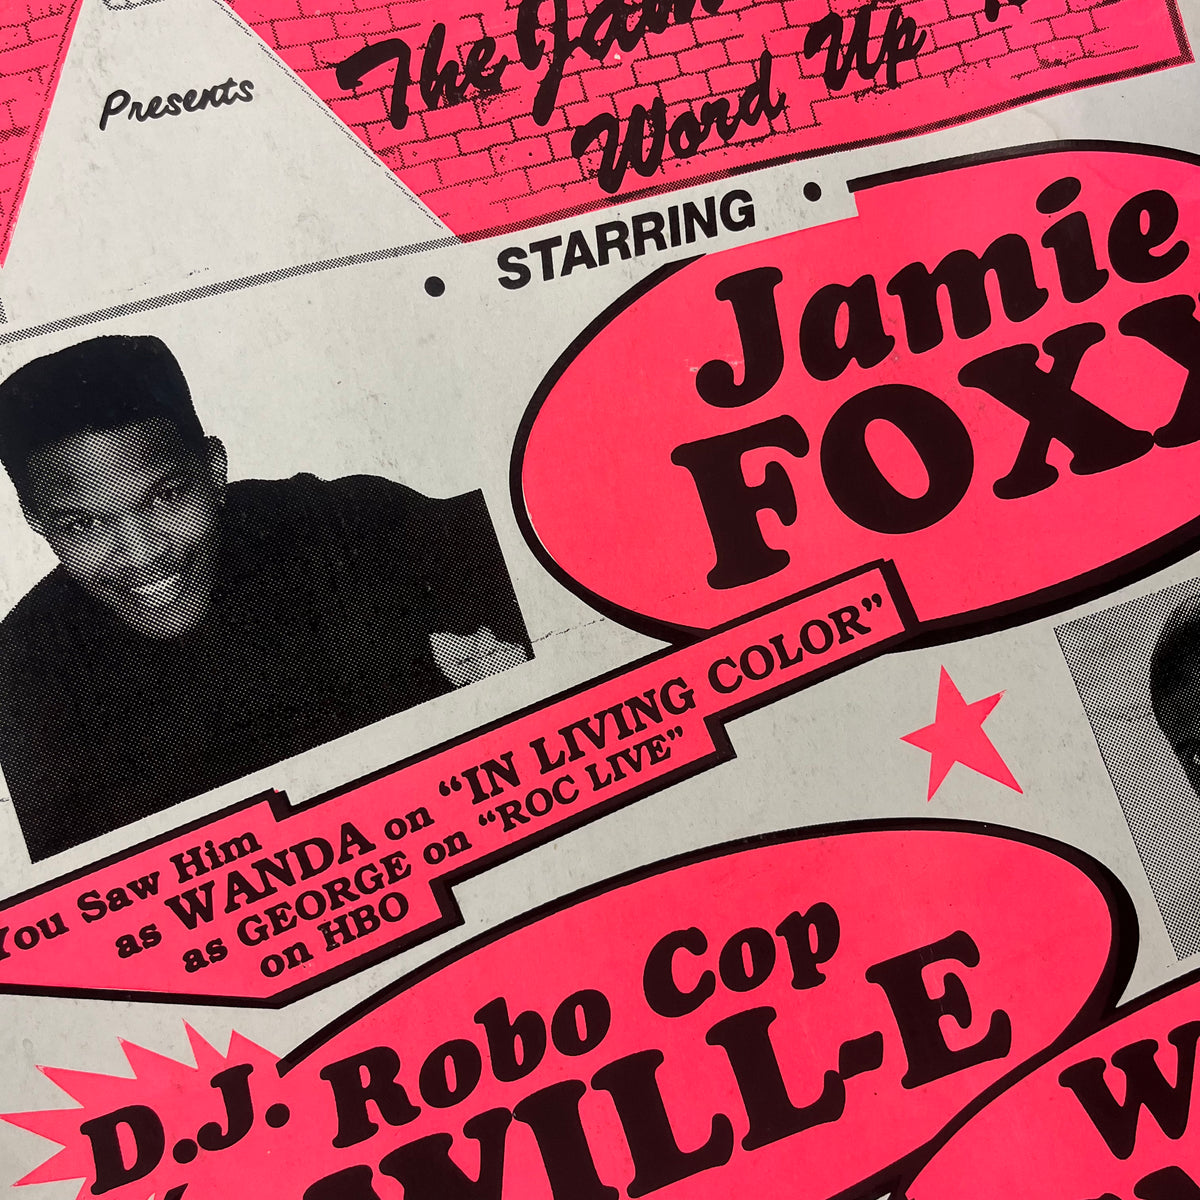 Vintage Jamie Foxx DJ Will-E Robo Wanda Smith &quot;The Jamie Foxx Word Up Tour&quot; A Little Floyd Production Globe Poster